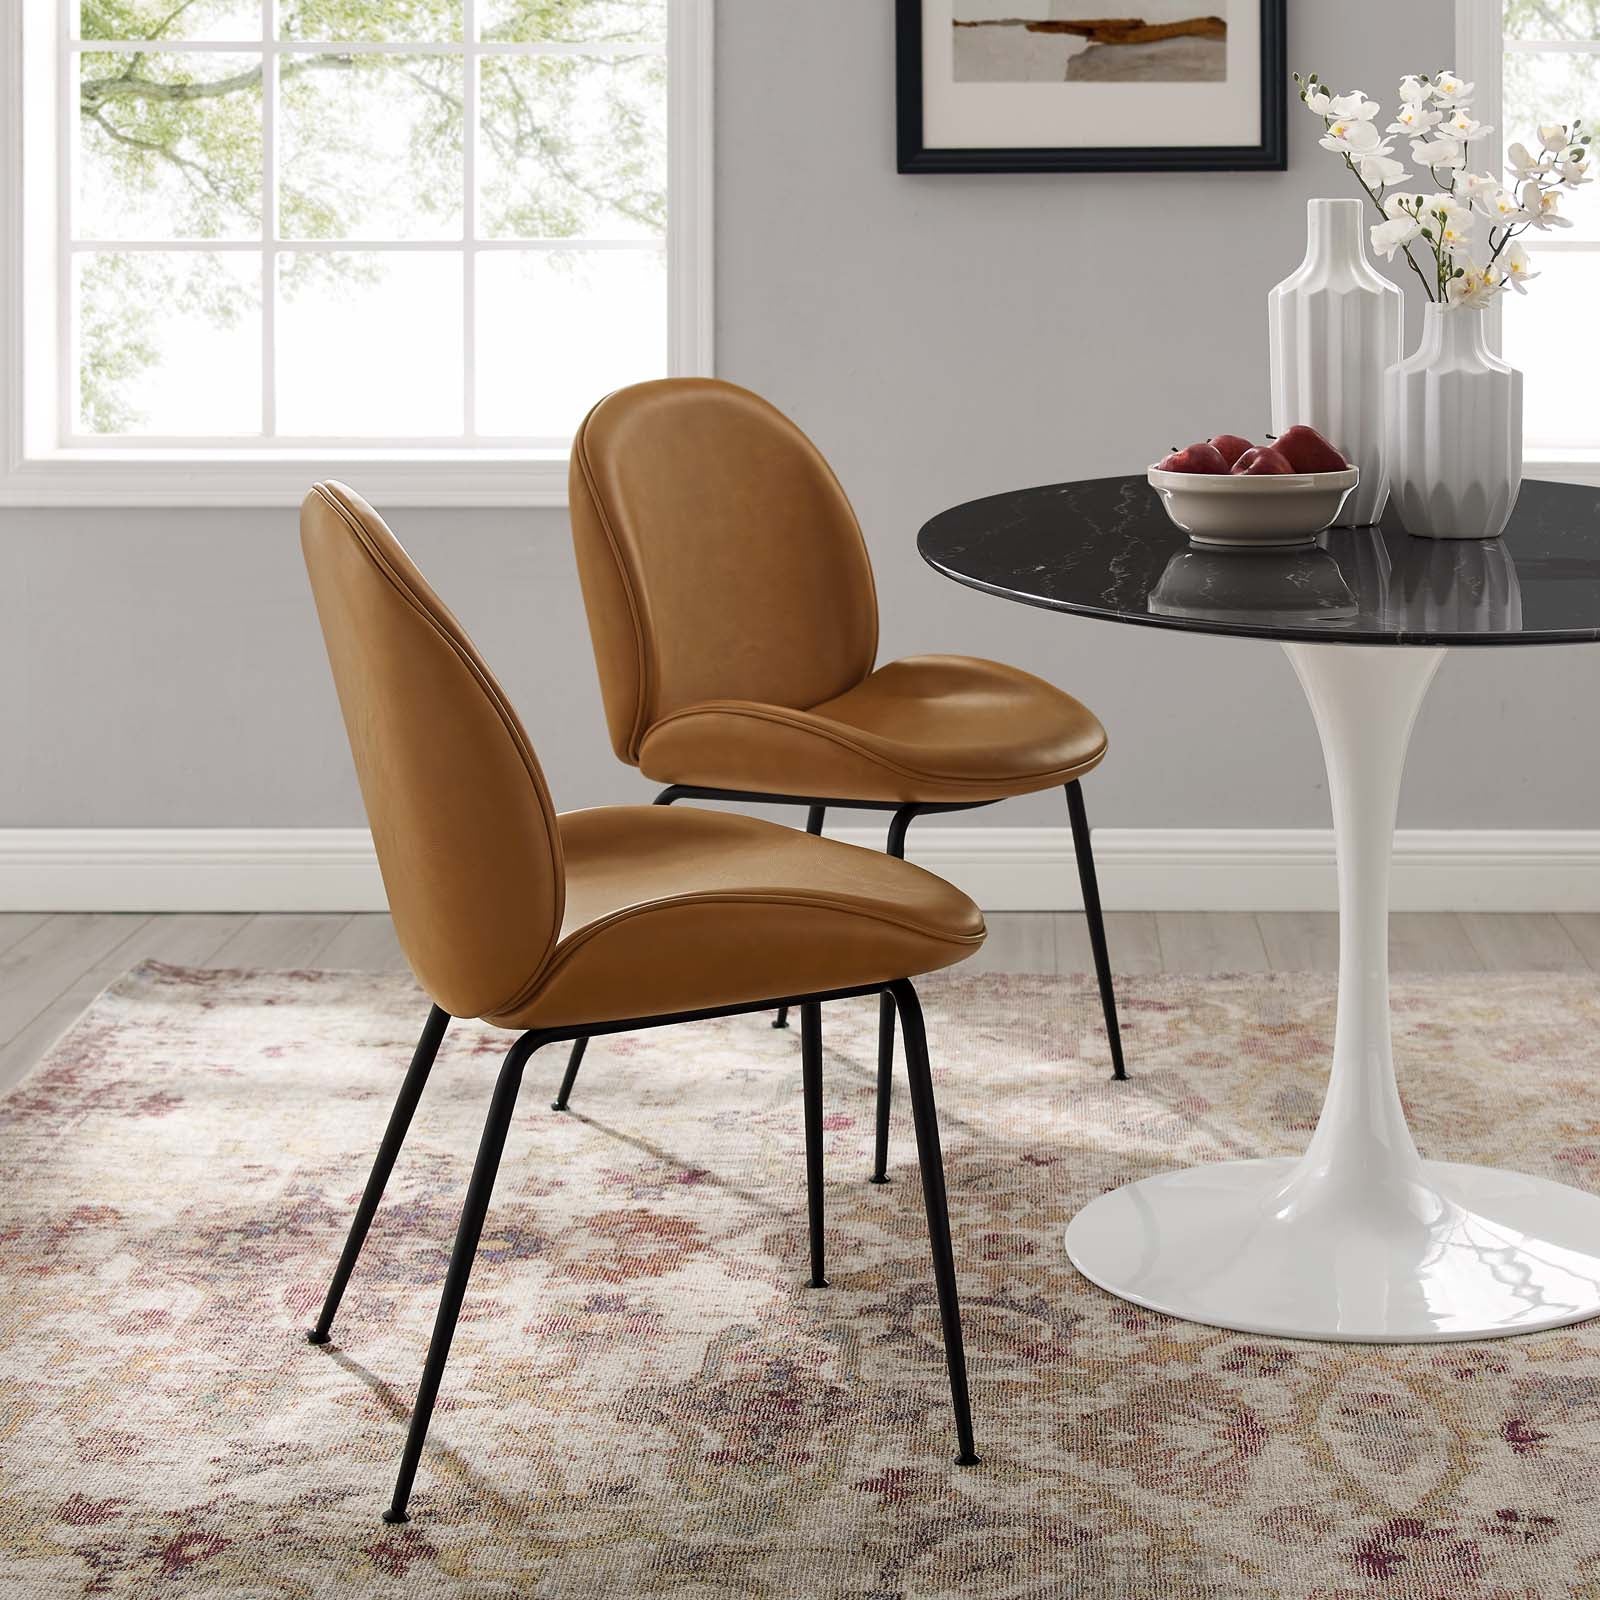 Scoop Black Powder Coated Steel Leg Vegan Leather Dining Chairs - Set of 2 - East Shore Modern Home Furnishings